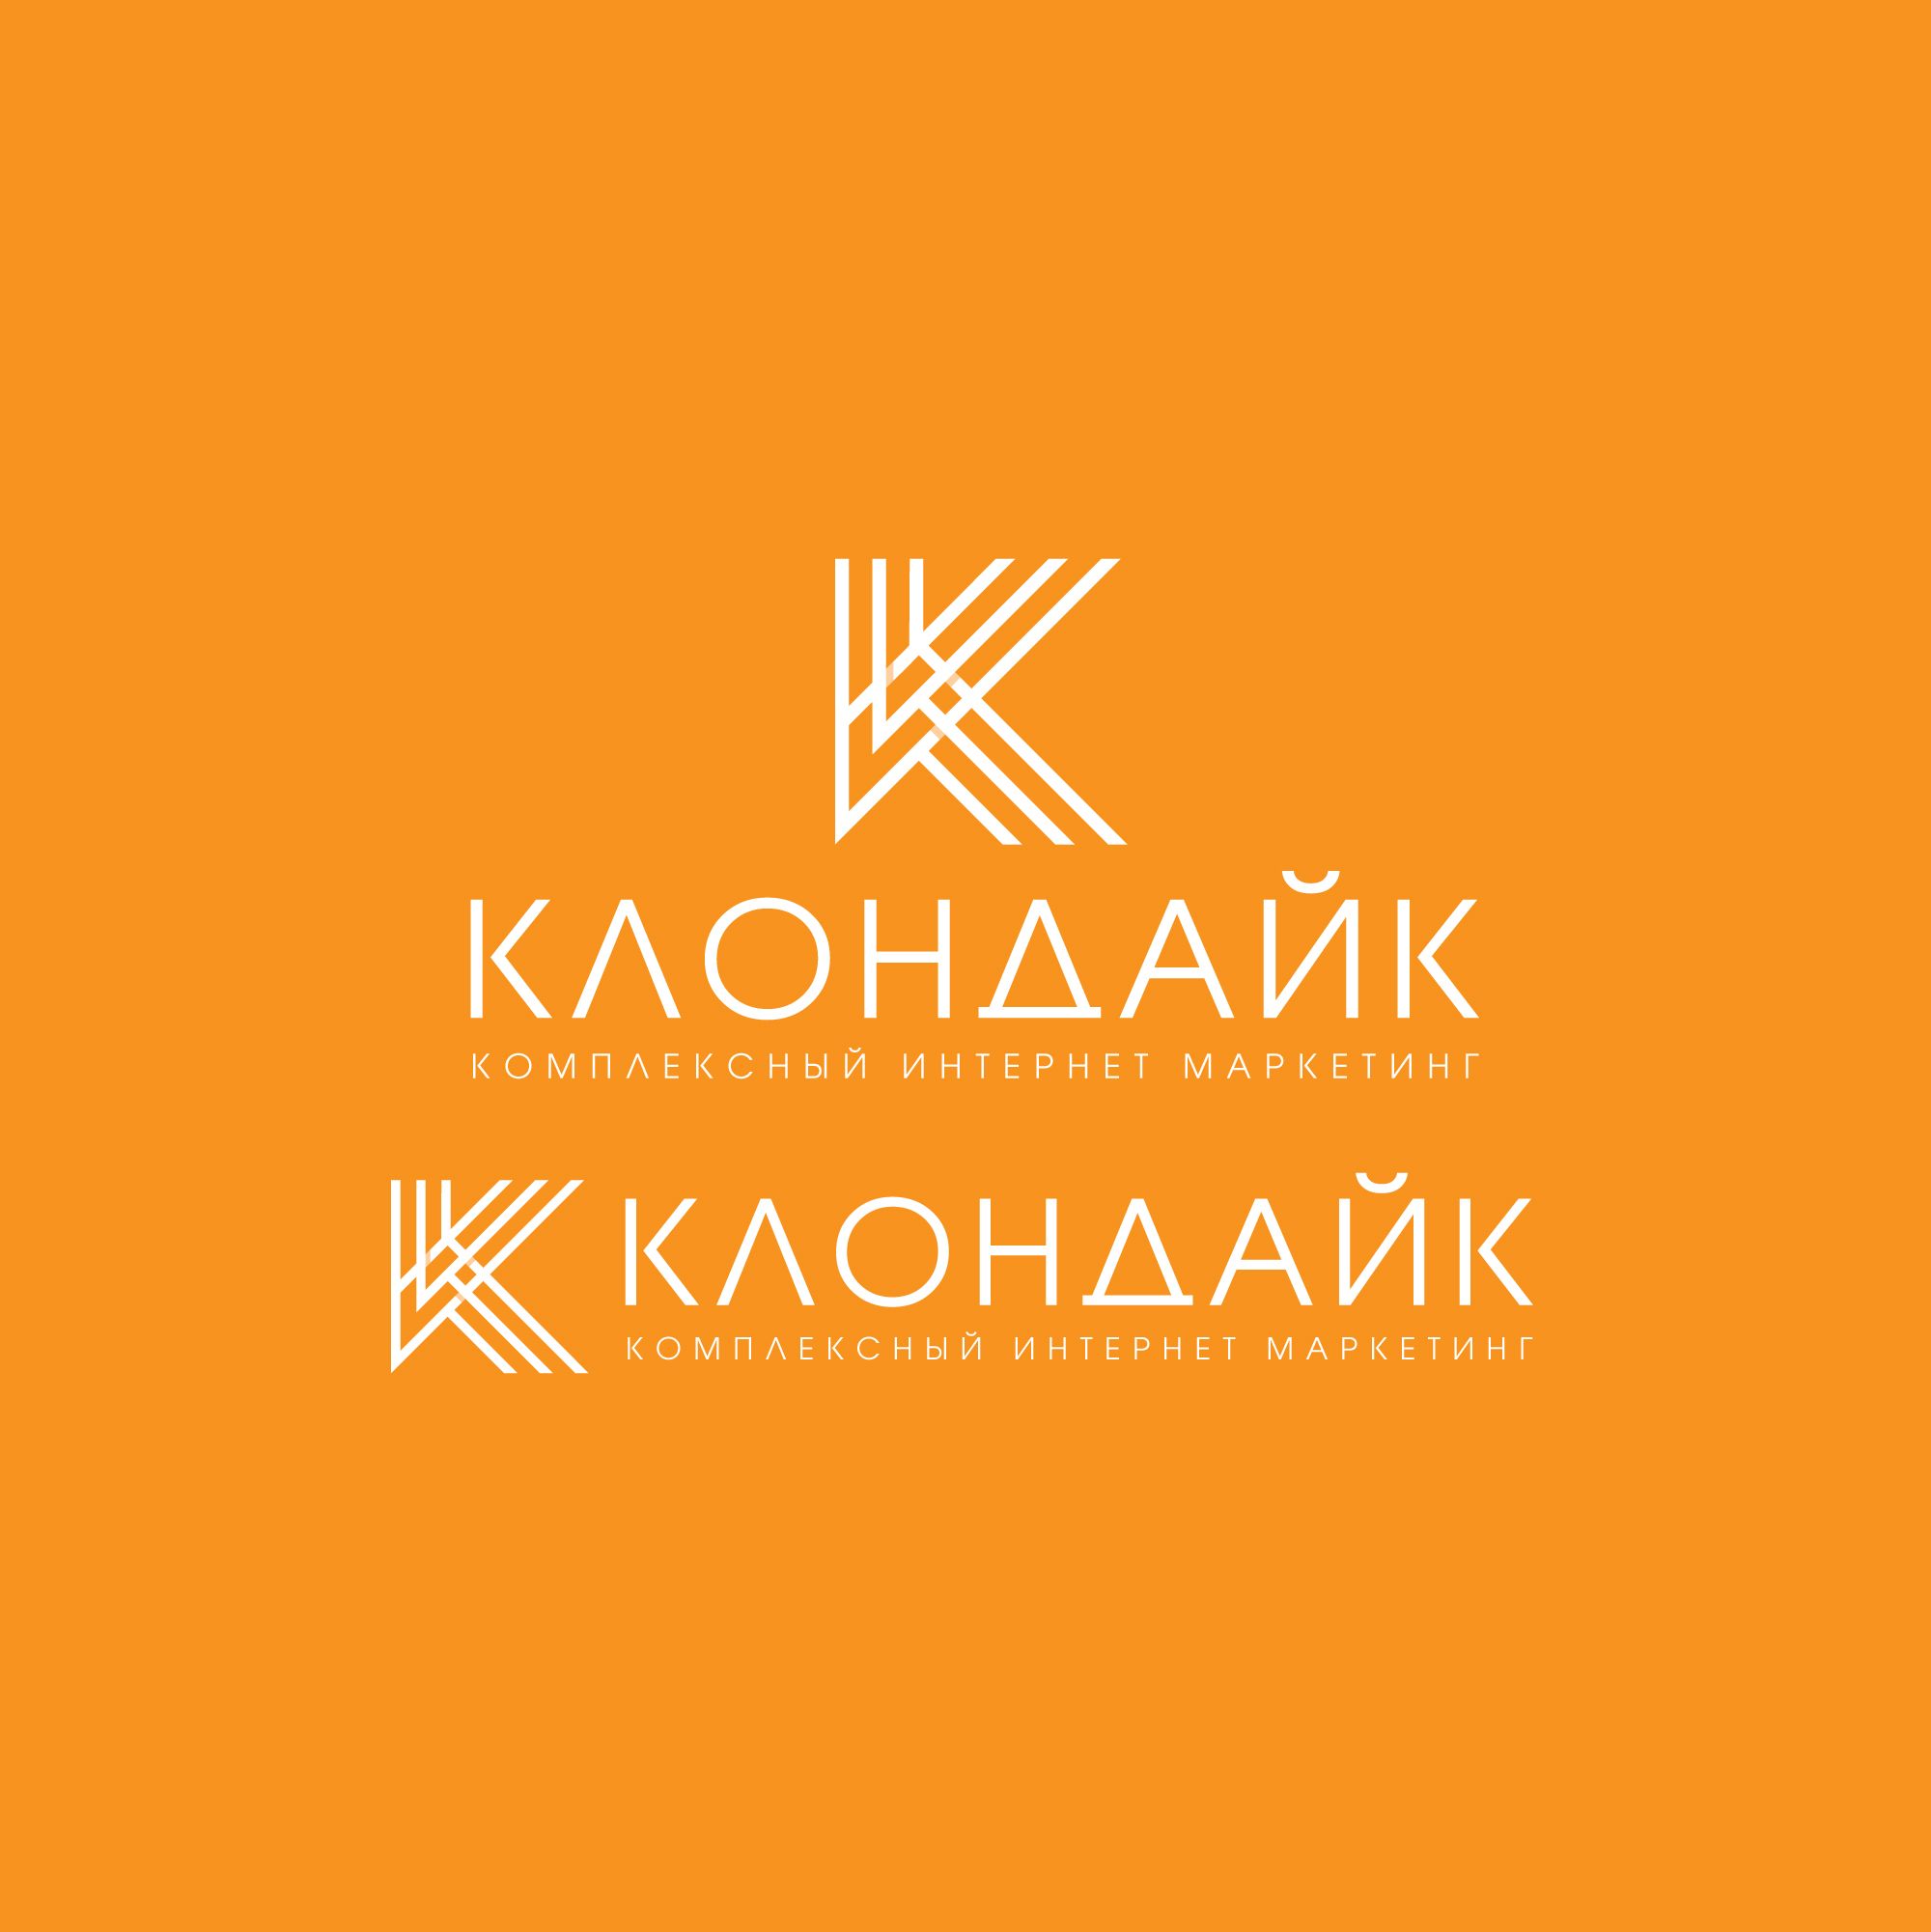 Логотип для Клондайк - дизайнер spawnkr